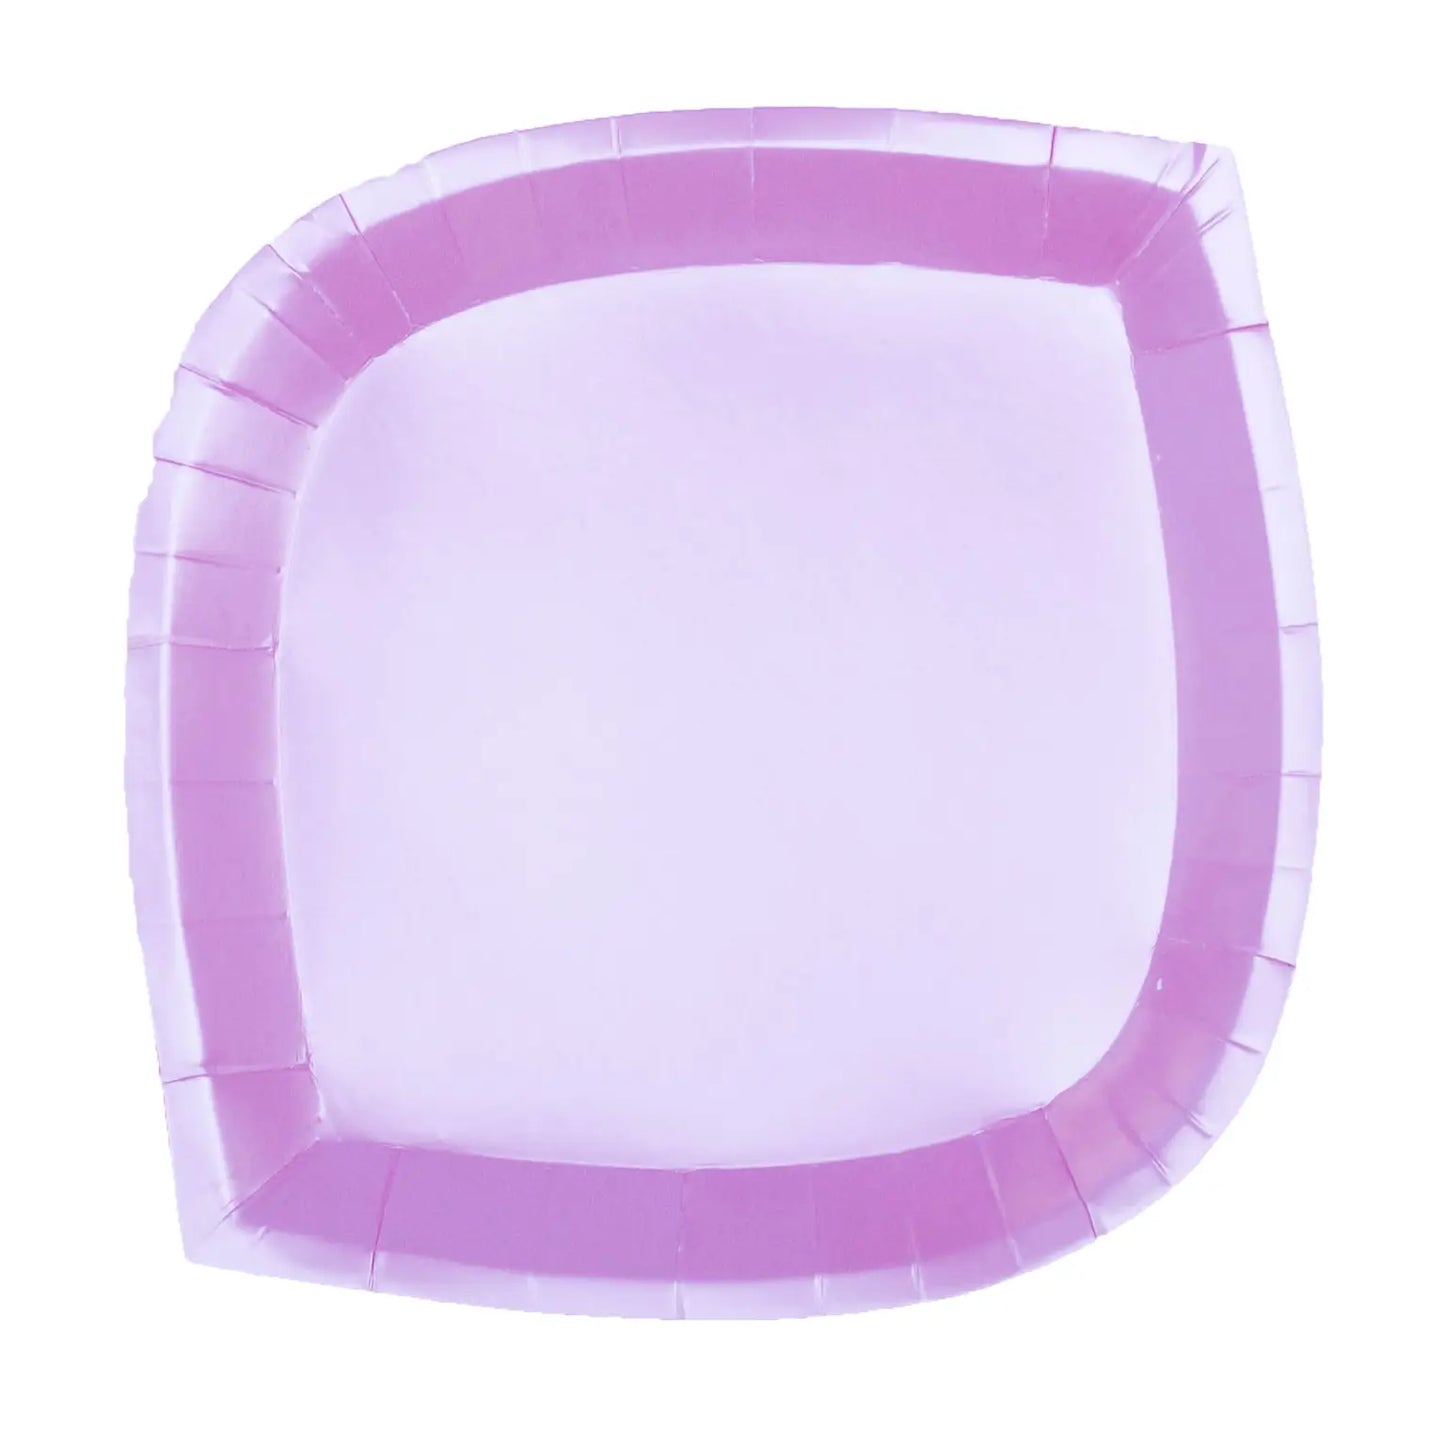 Posh PinkAholic Plates - 3 Size Options - 8 Pk.